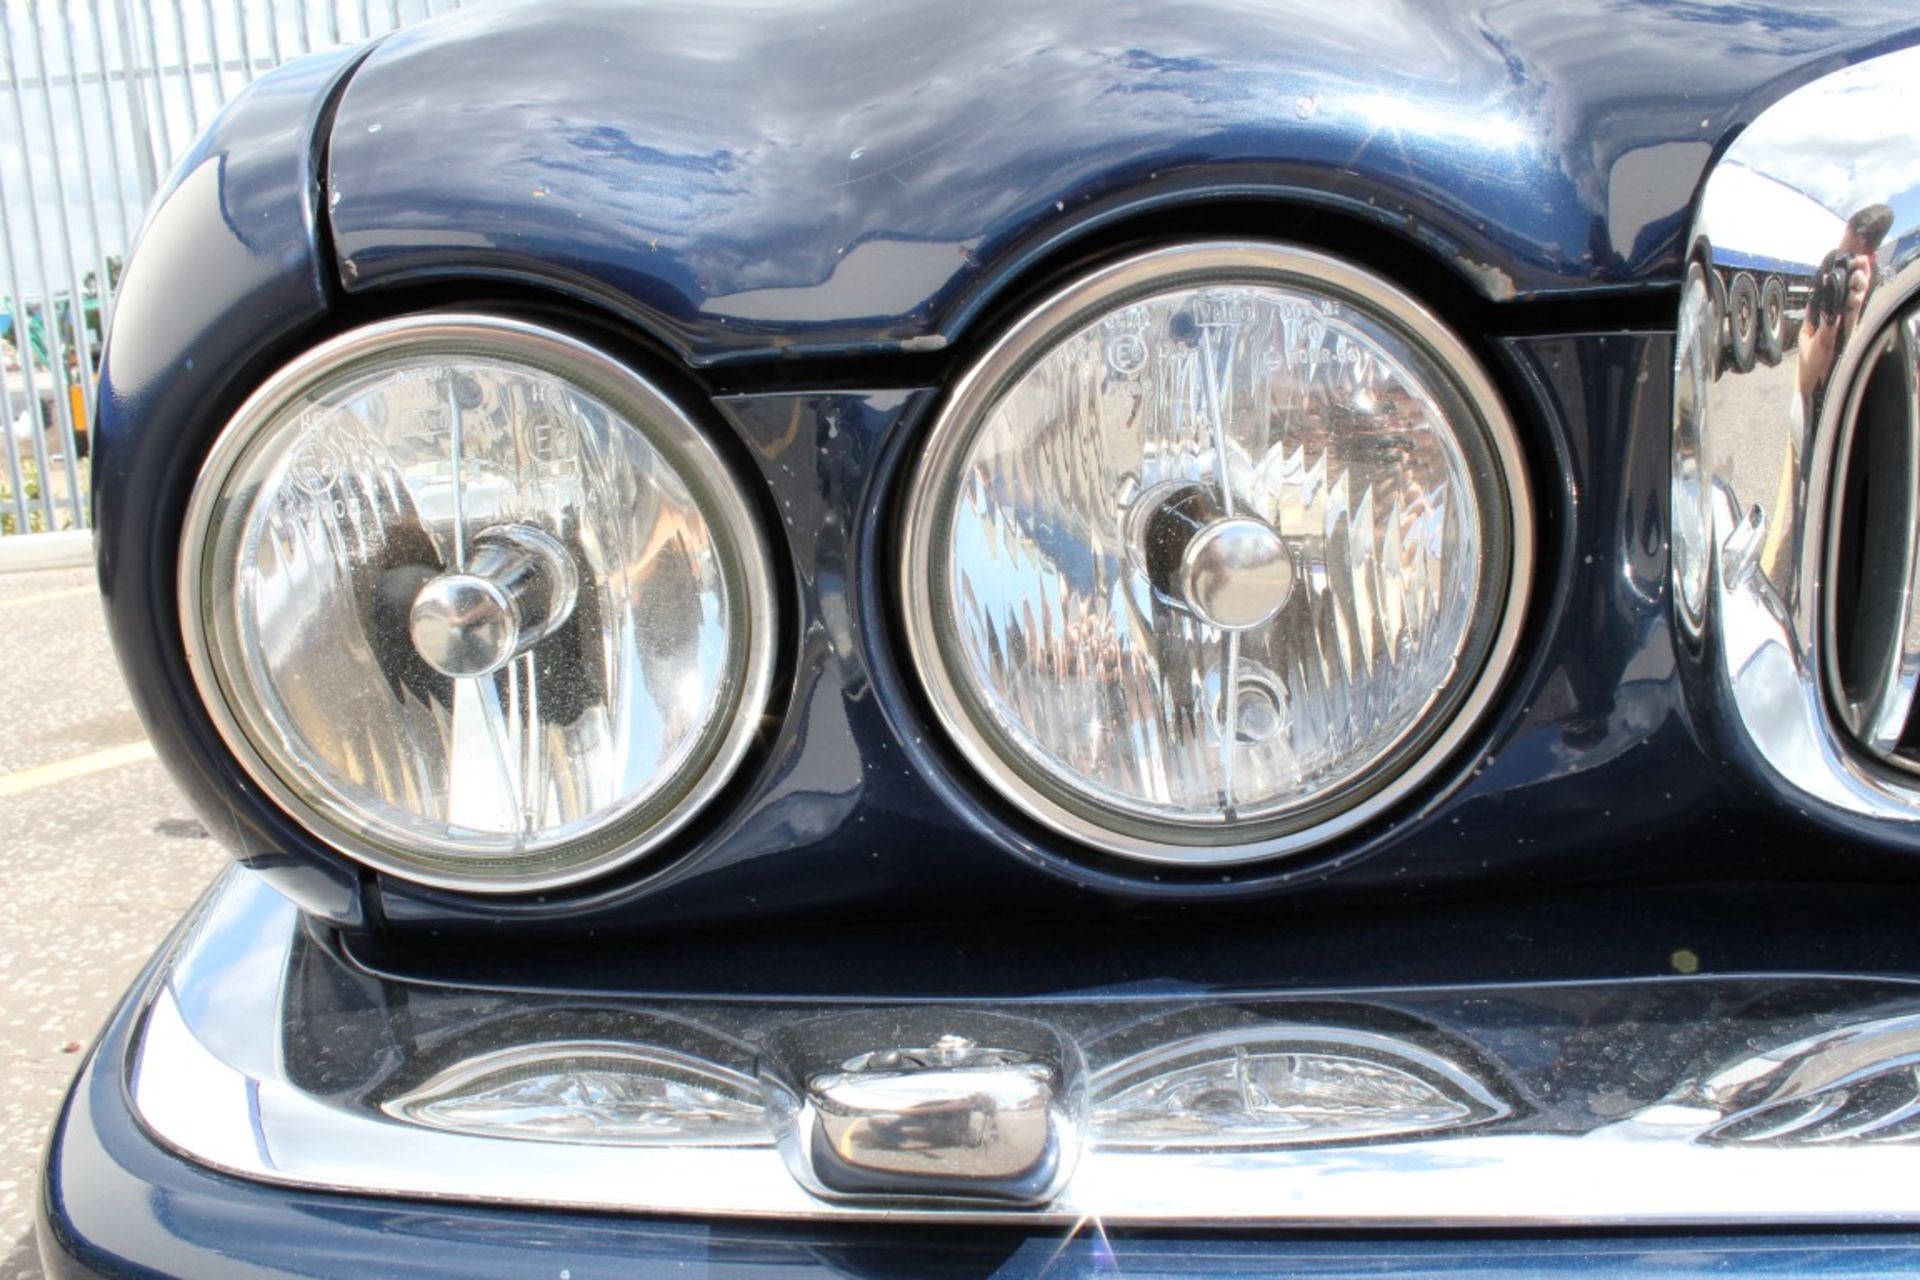 1 x Jaguar Daimler Super V8 Auto 4-Door Saloon - Year 2001 - Blue - Odometer Reading 122,520 - MOT - Image 19 of 77